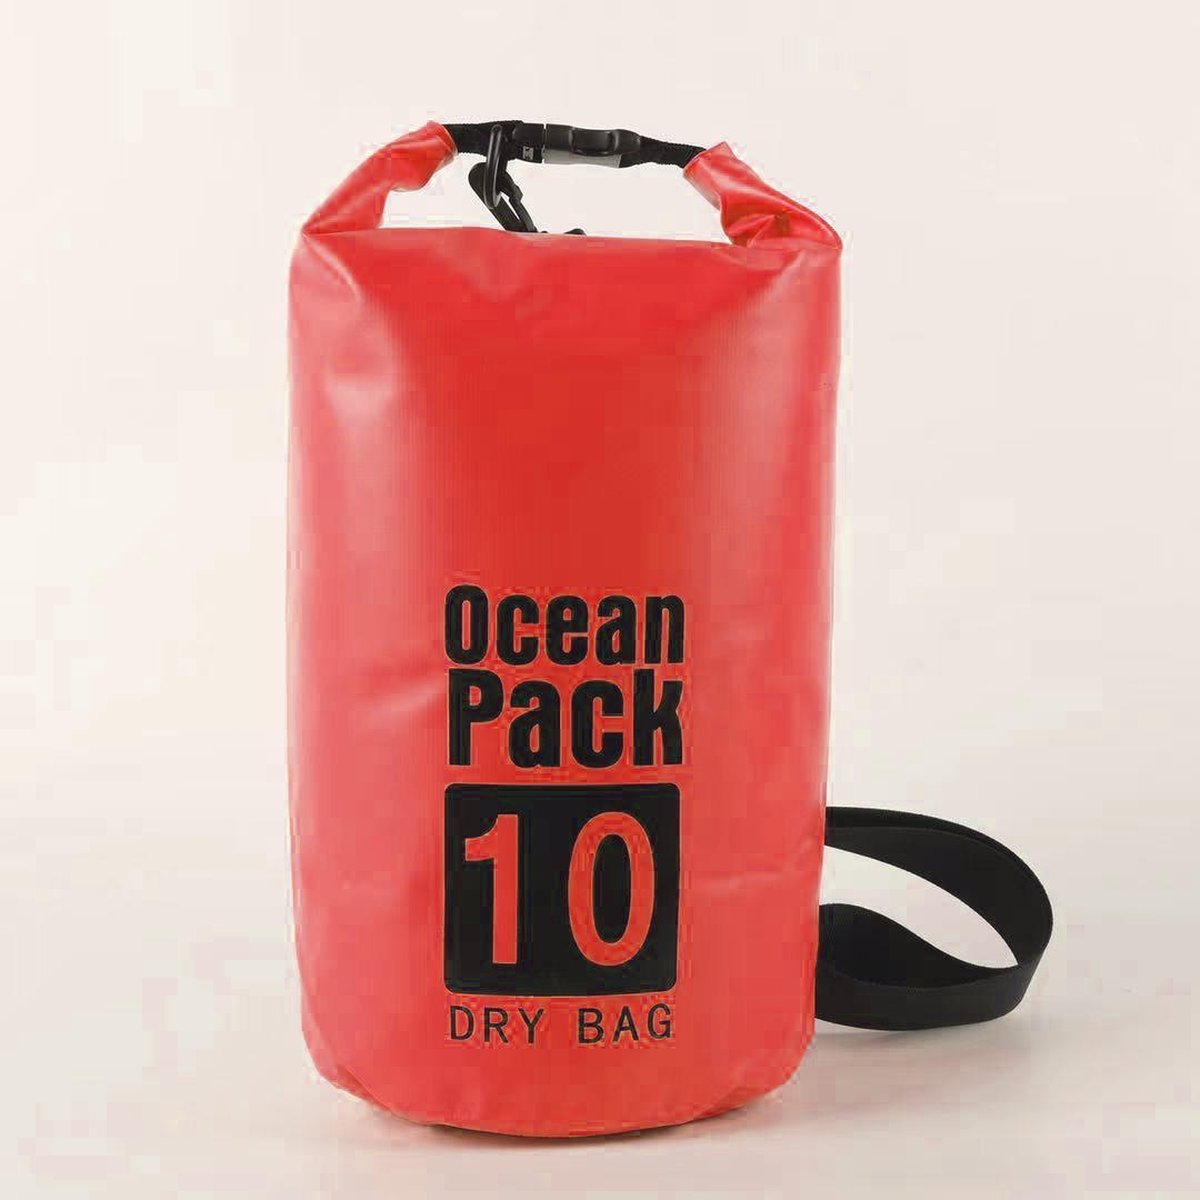 Waterdichte Tas - Dry bag - 10L - Rood - Ocean Pack - Dry Sack - Survival Outdoor Rugzak - Drybags - Boottas - Zeiltas